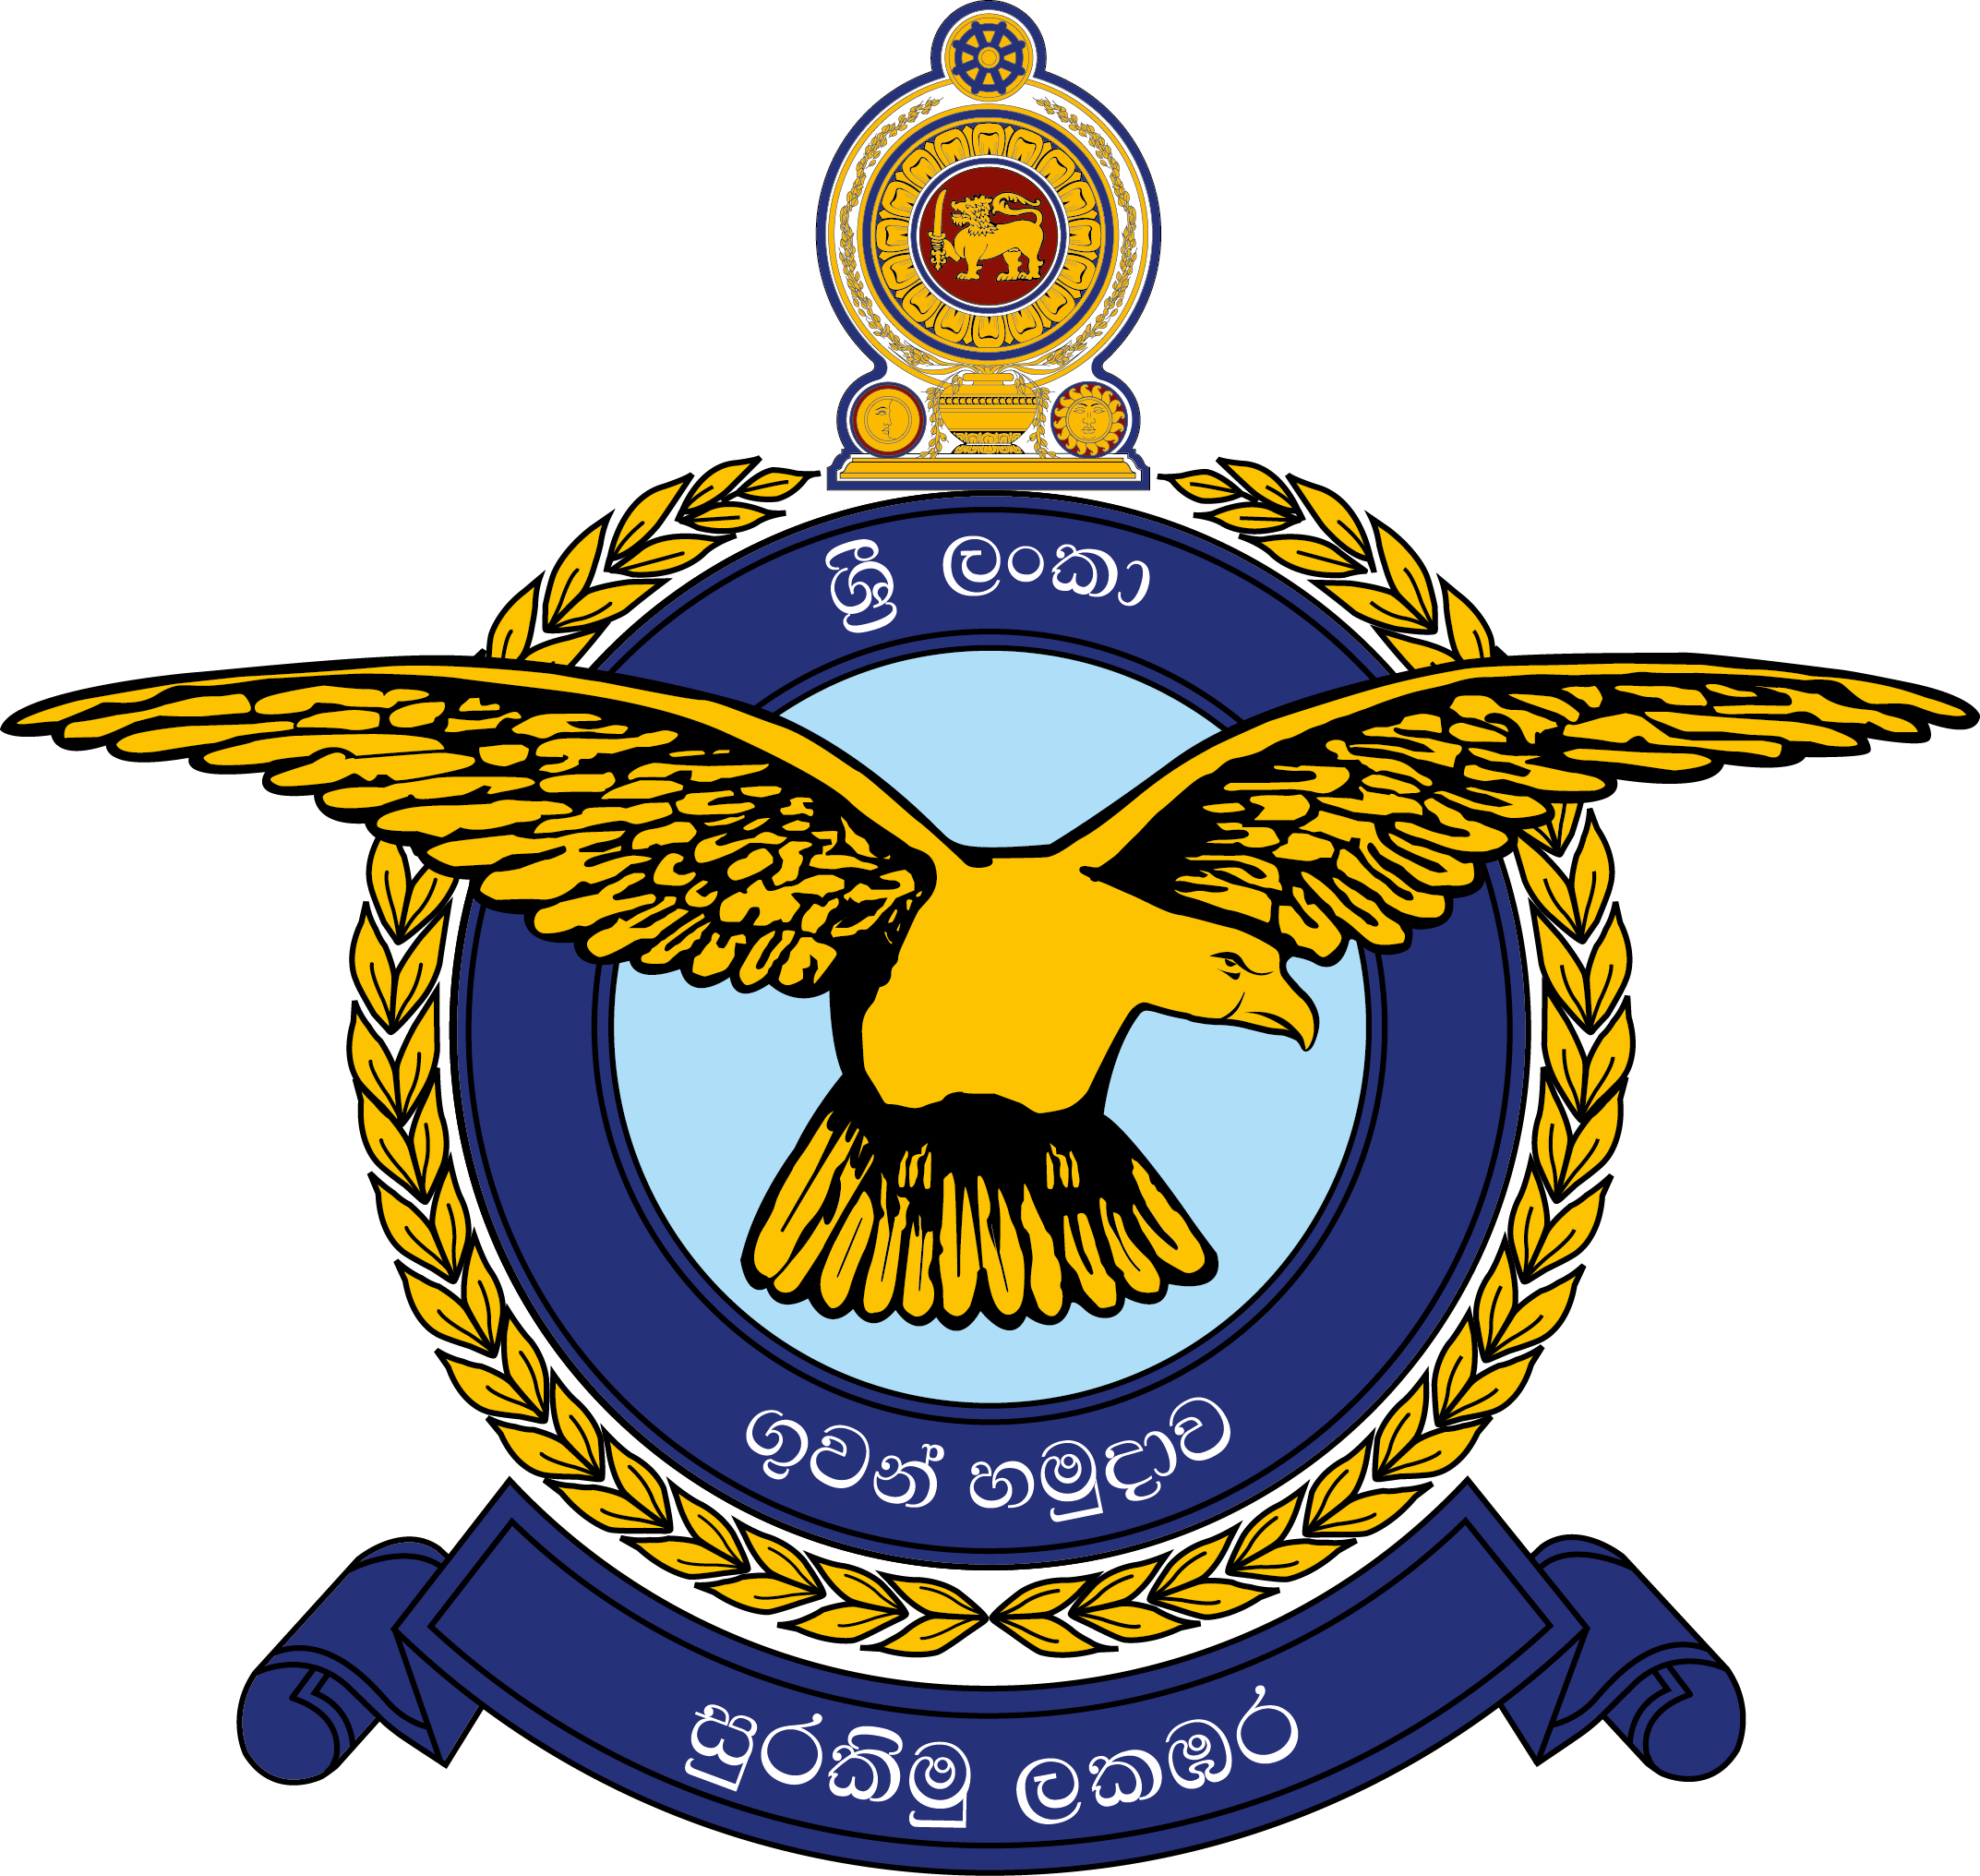 Air Foce Logo - Sri Lanka Air Force